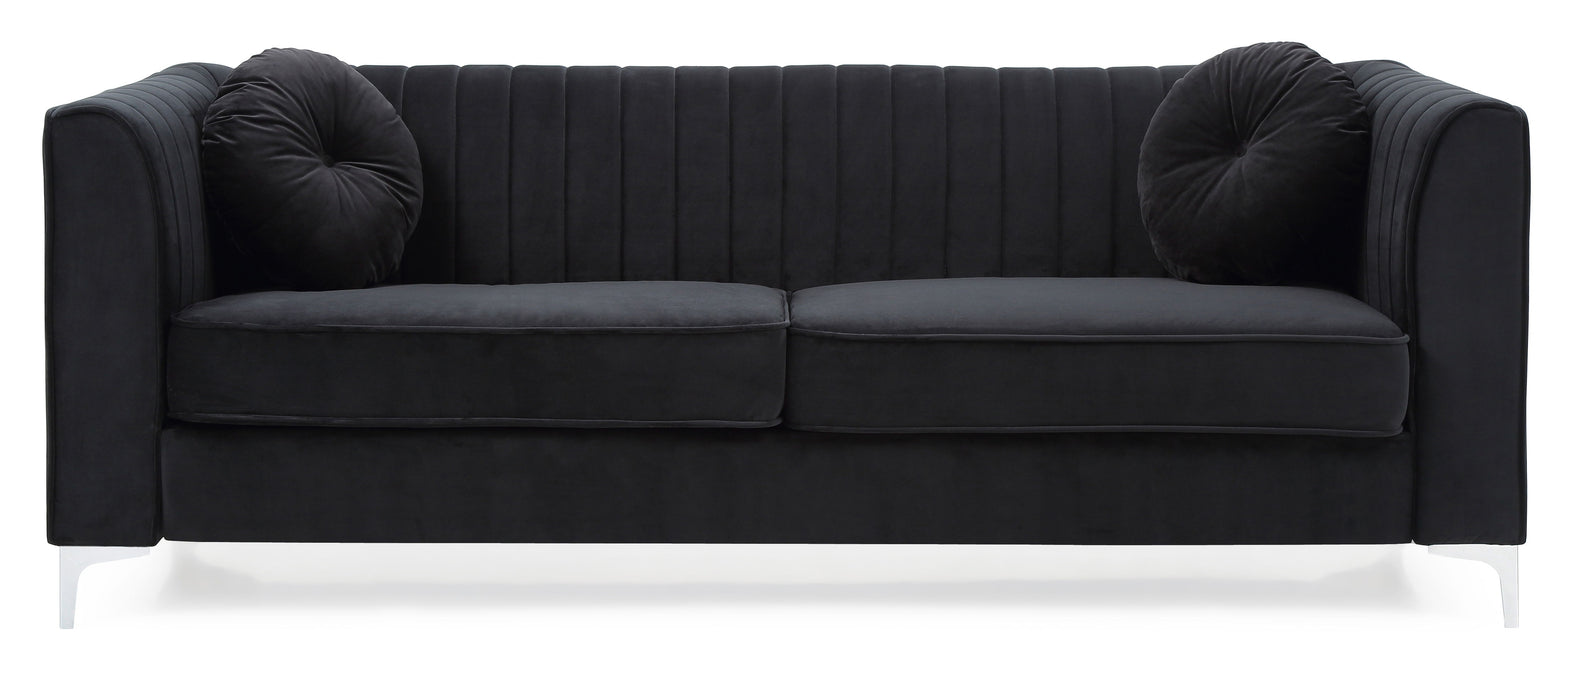 Delray - G793A-S Sofa (2 Boxes) - Black